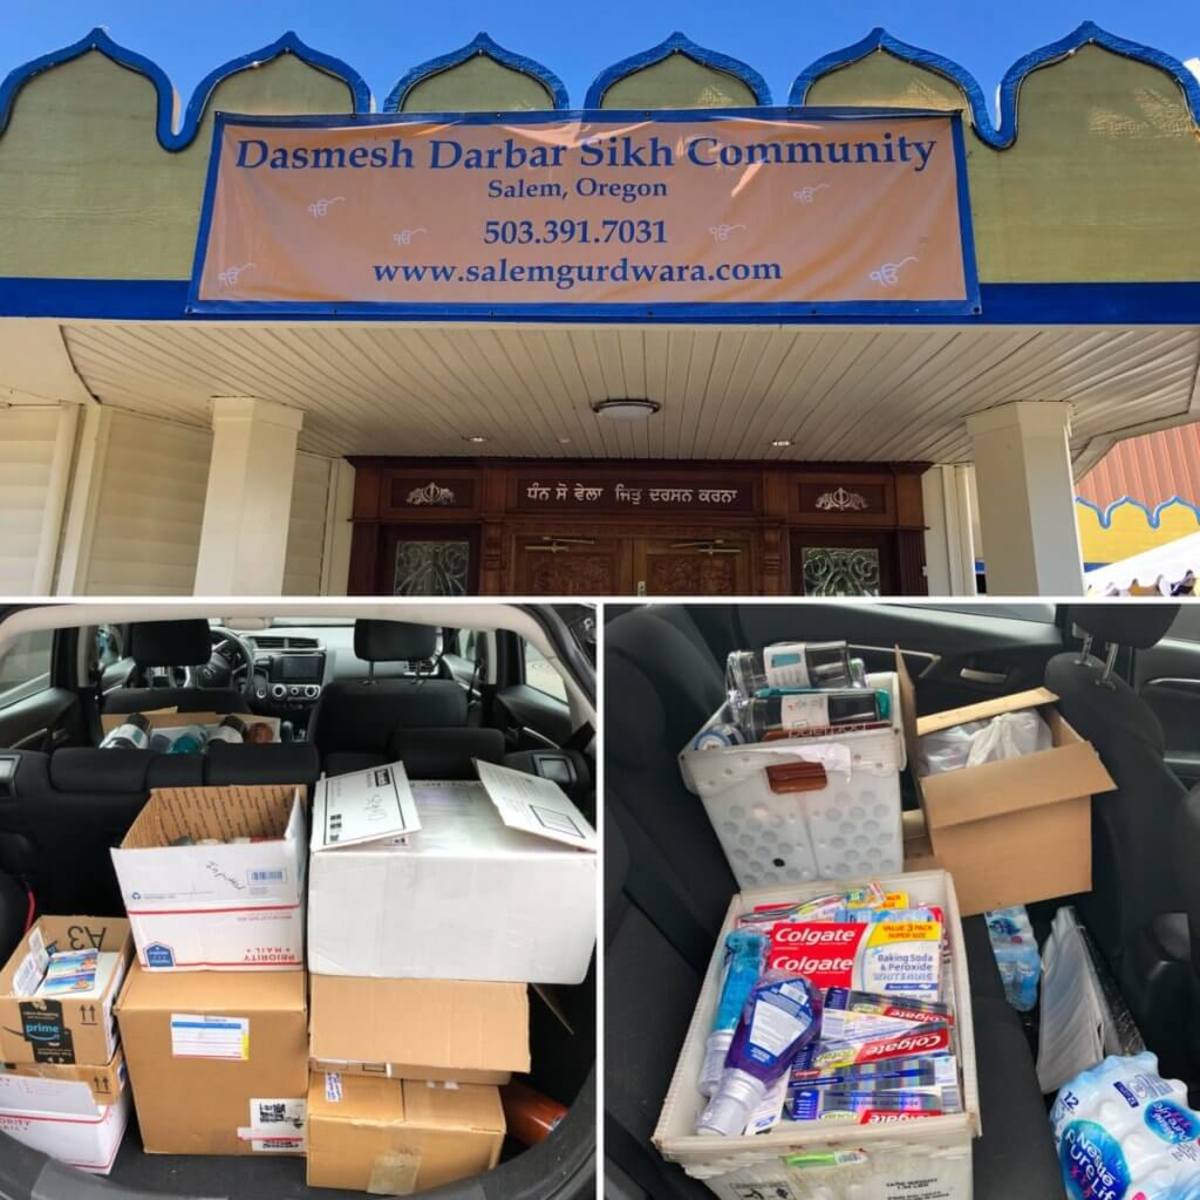 Donations to the Salem Sikh Community Center. (Jai Singh / Twitter)